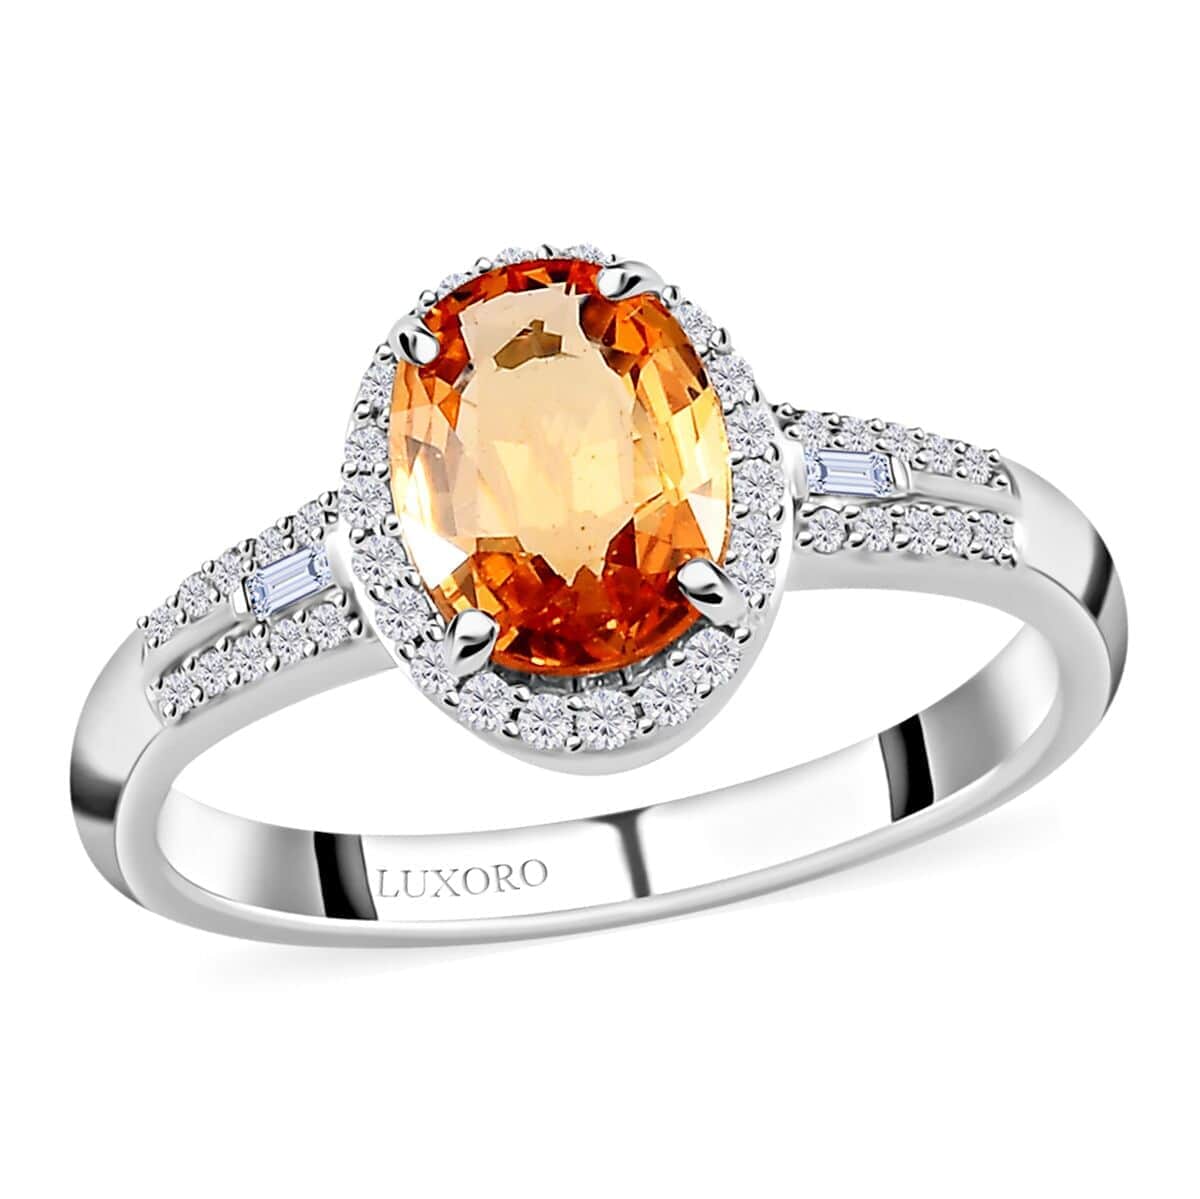 Luxoro 10K White Gold Premium Natural Ceylon Orange Sapphire and G-H I2 Diamond Halo Ring (Size 10.0) 1.65 ctw image number 0